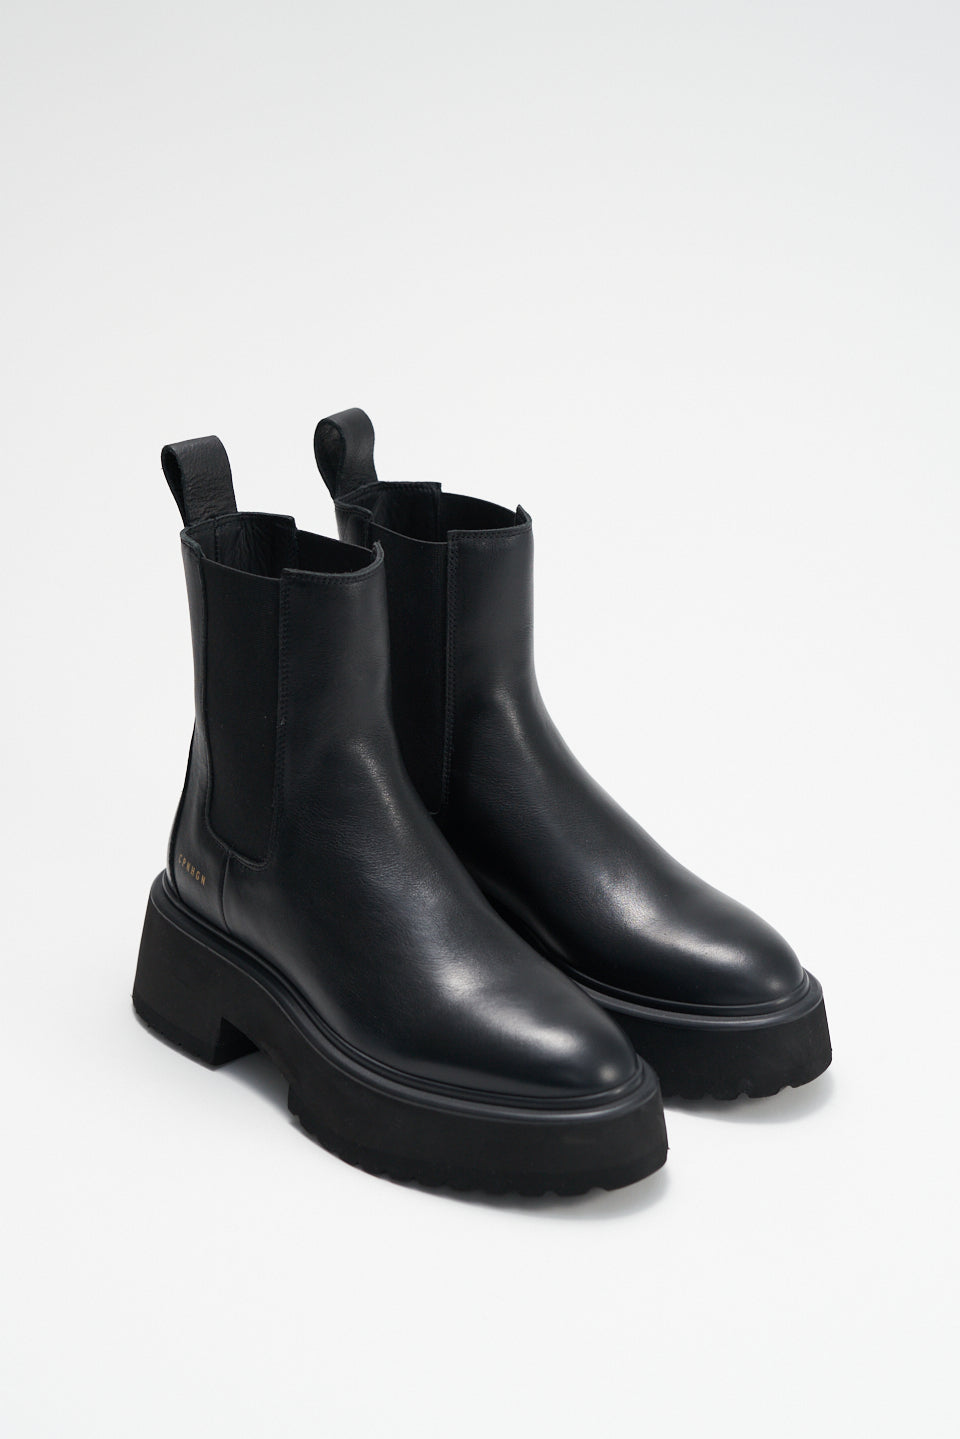 Vitello Black Low Chelsea Boots CPH683_BLACK - 2